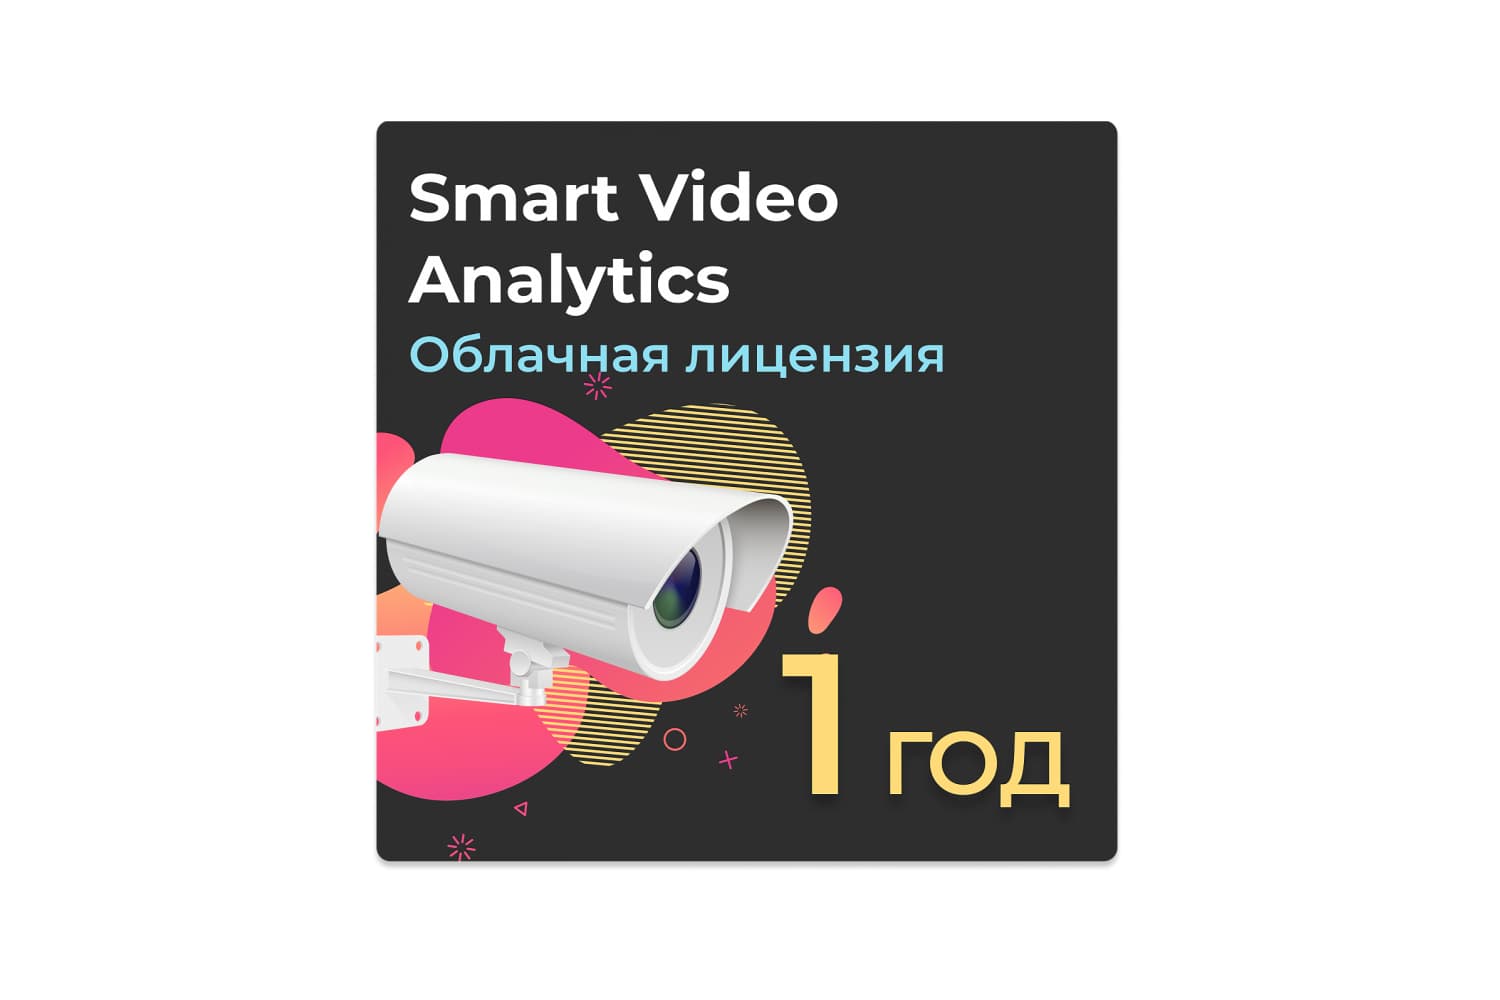  Фото облачная лицензия smart video analytics на 1 год - фото 1